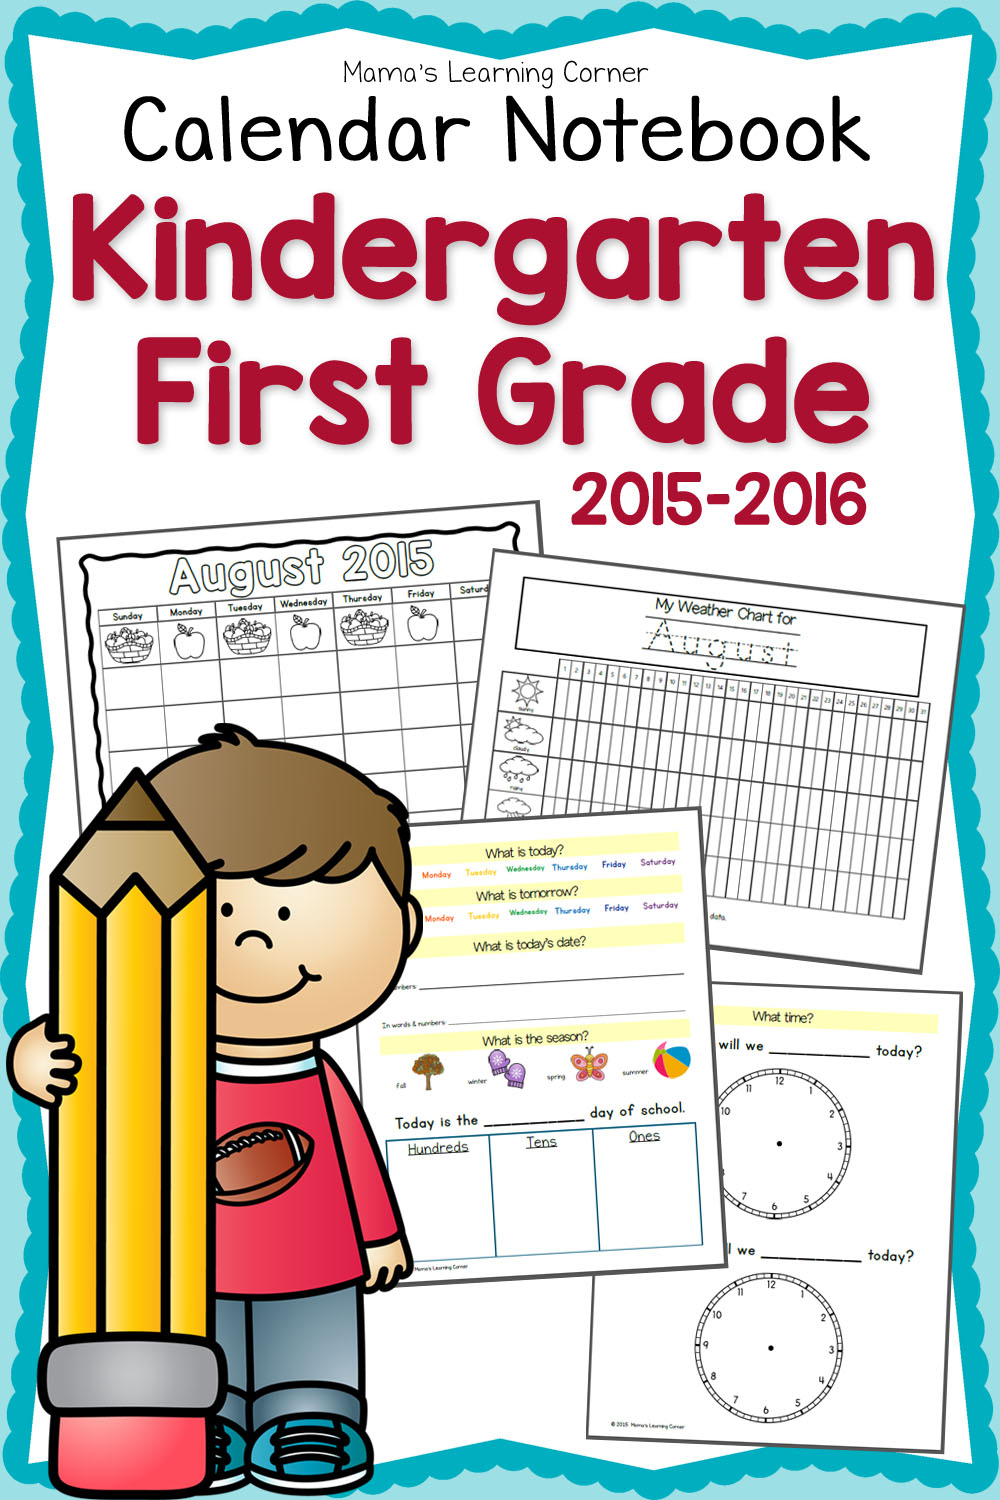 Free Printable First Grade Calendar Notebook | Money Saving